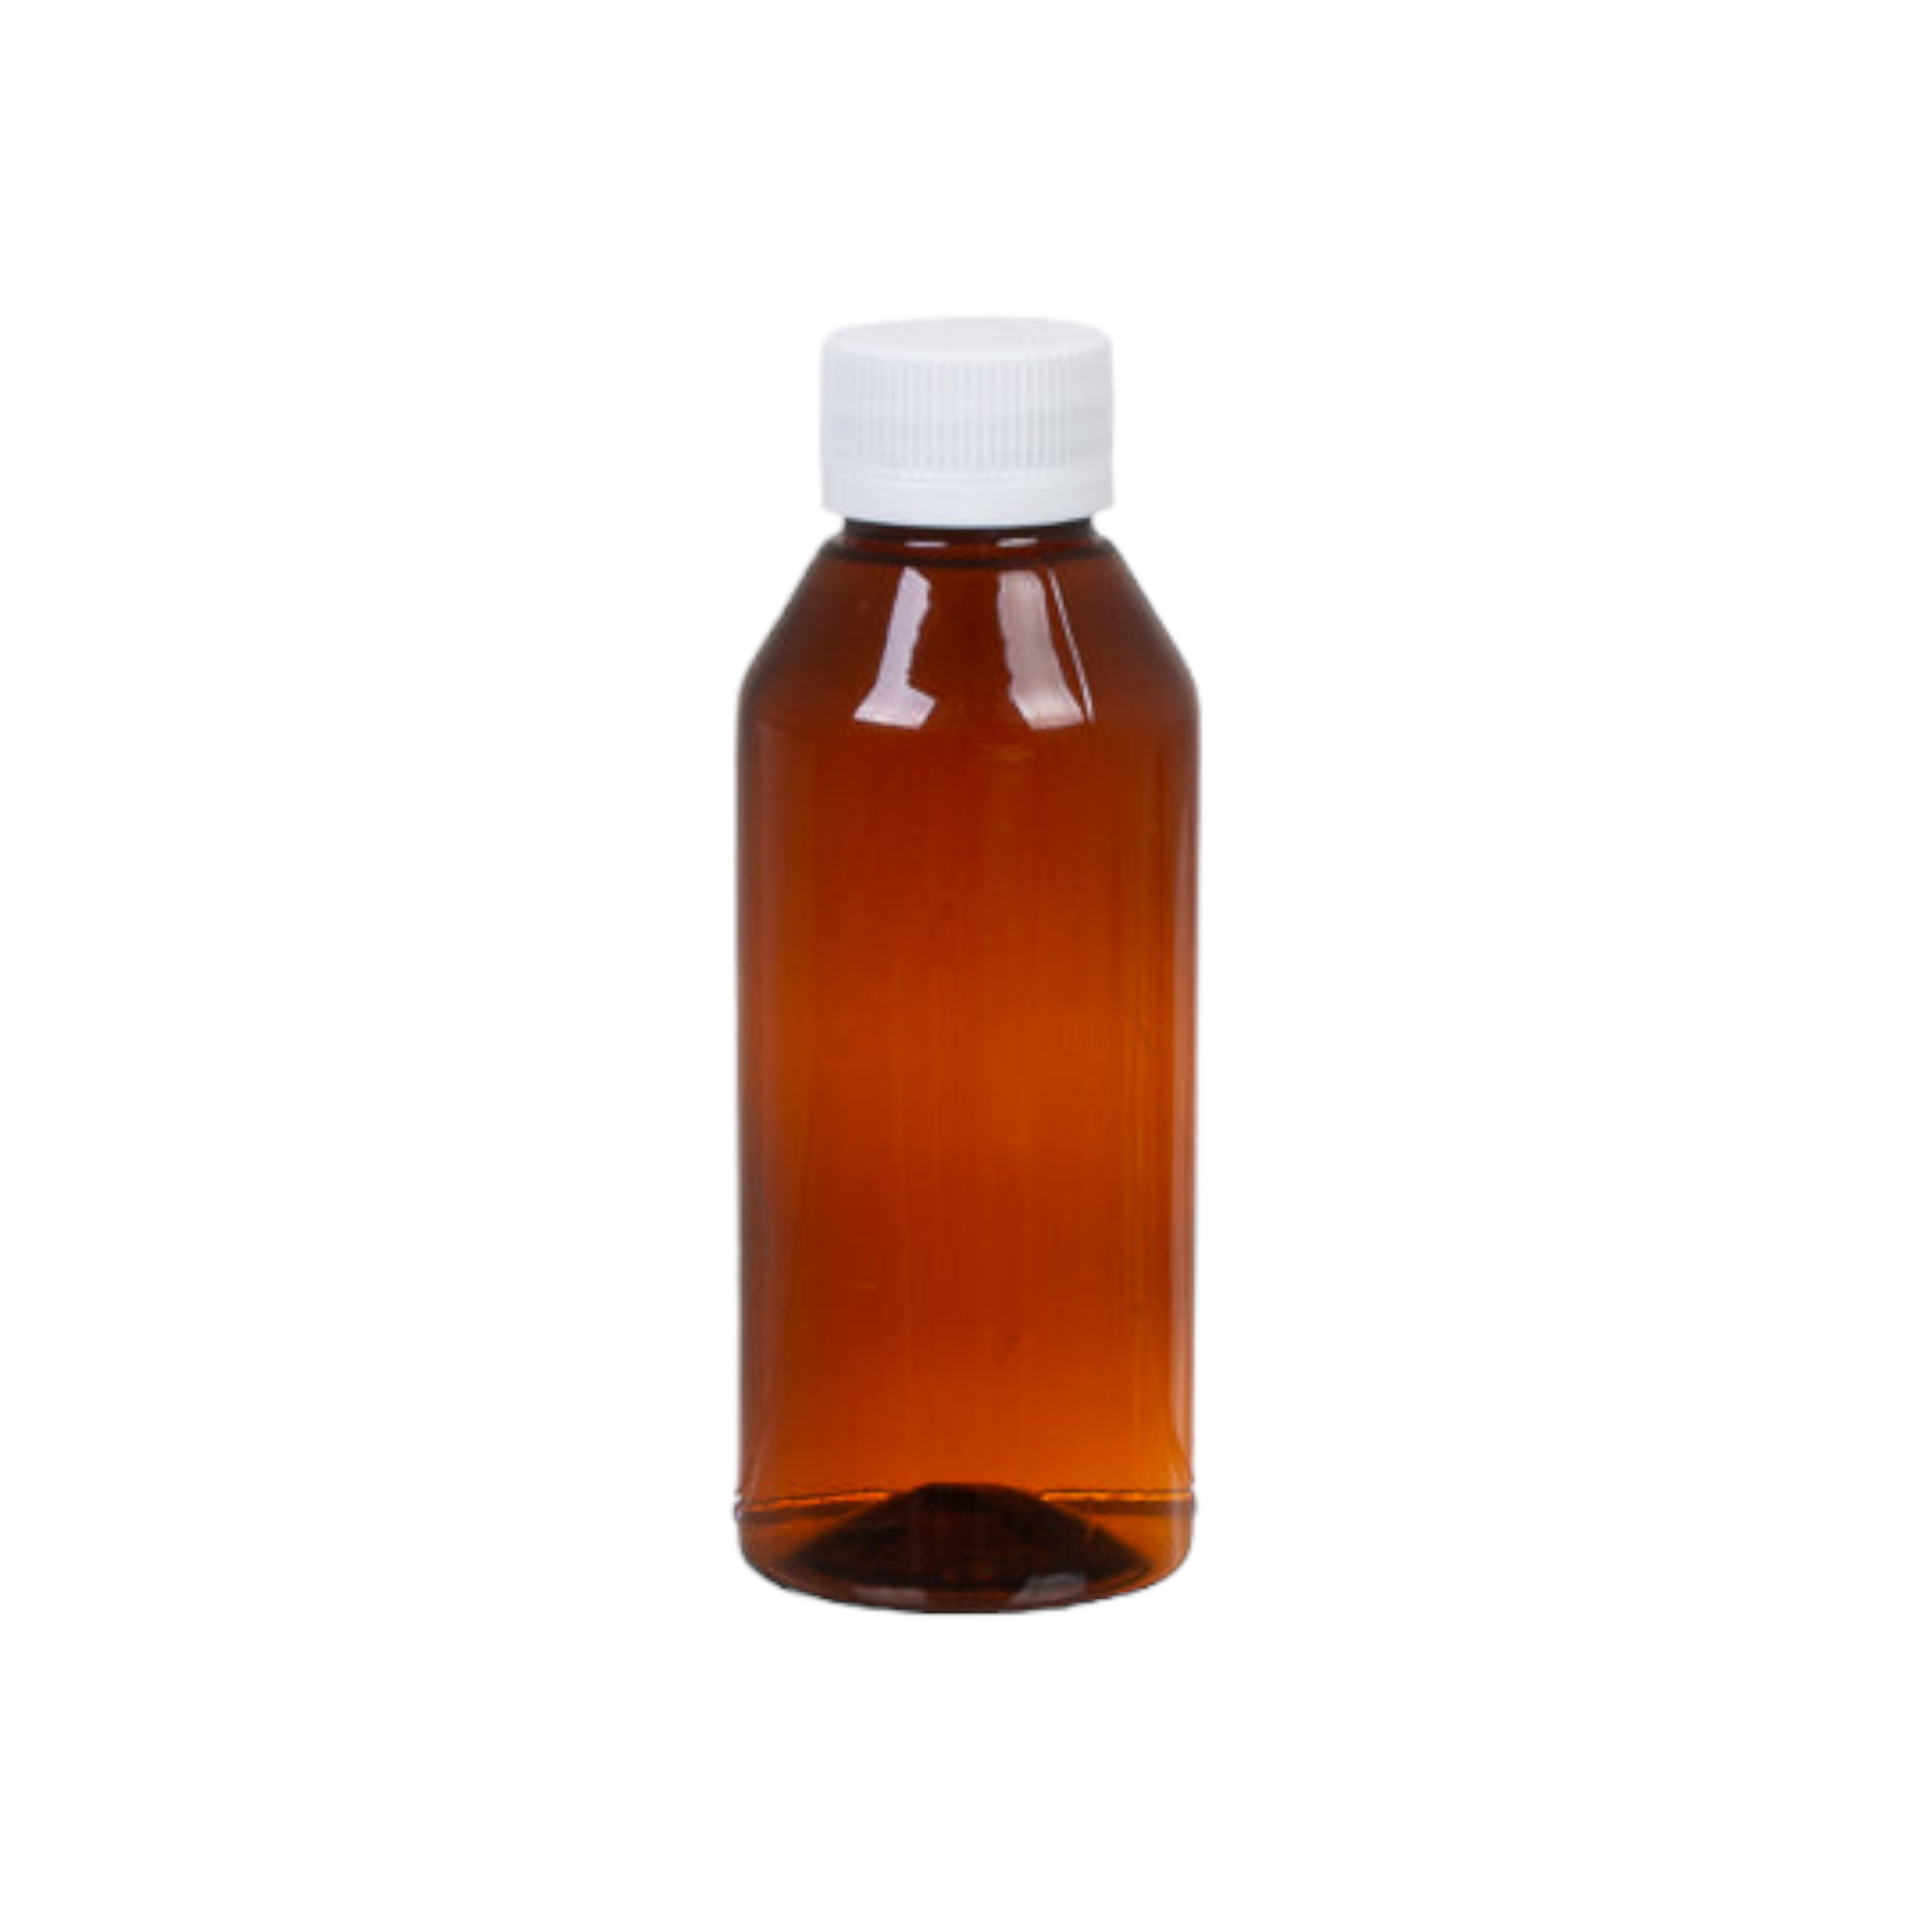 100ml Amber PVC Bottle Round Brown 100ml with White Screw Cap 28mm